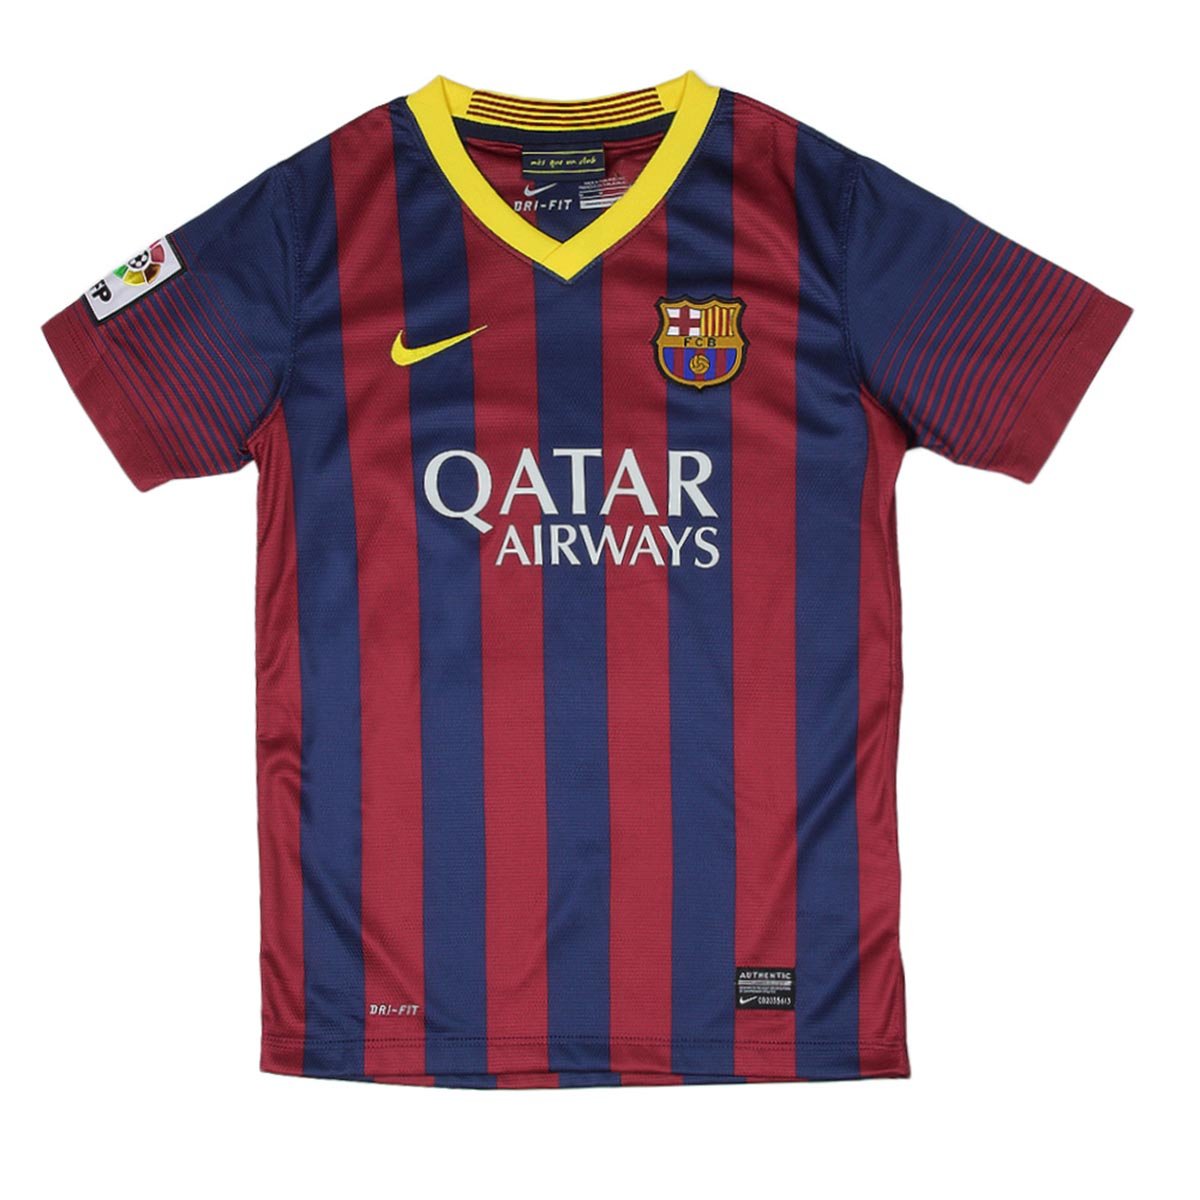 Buy Nike FC Barcelona Home Jersey 2013/14 (Boys - Junior) Online